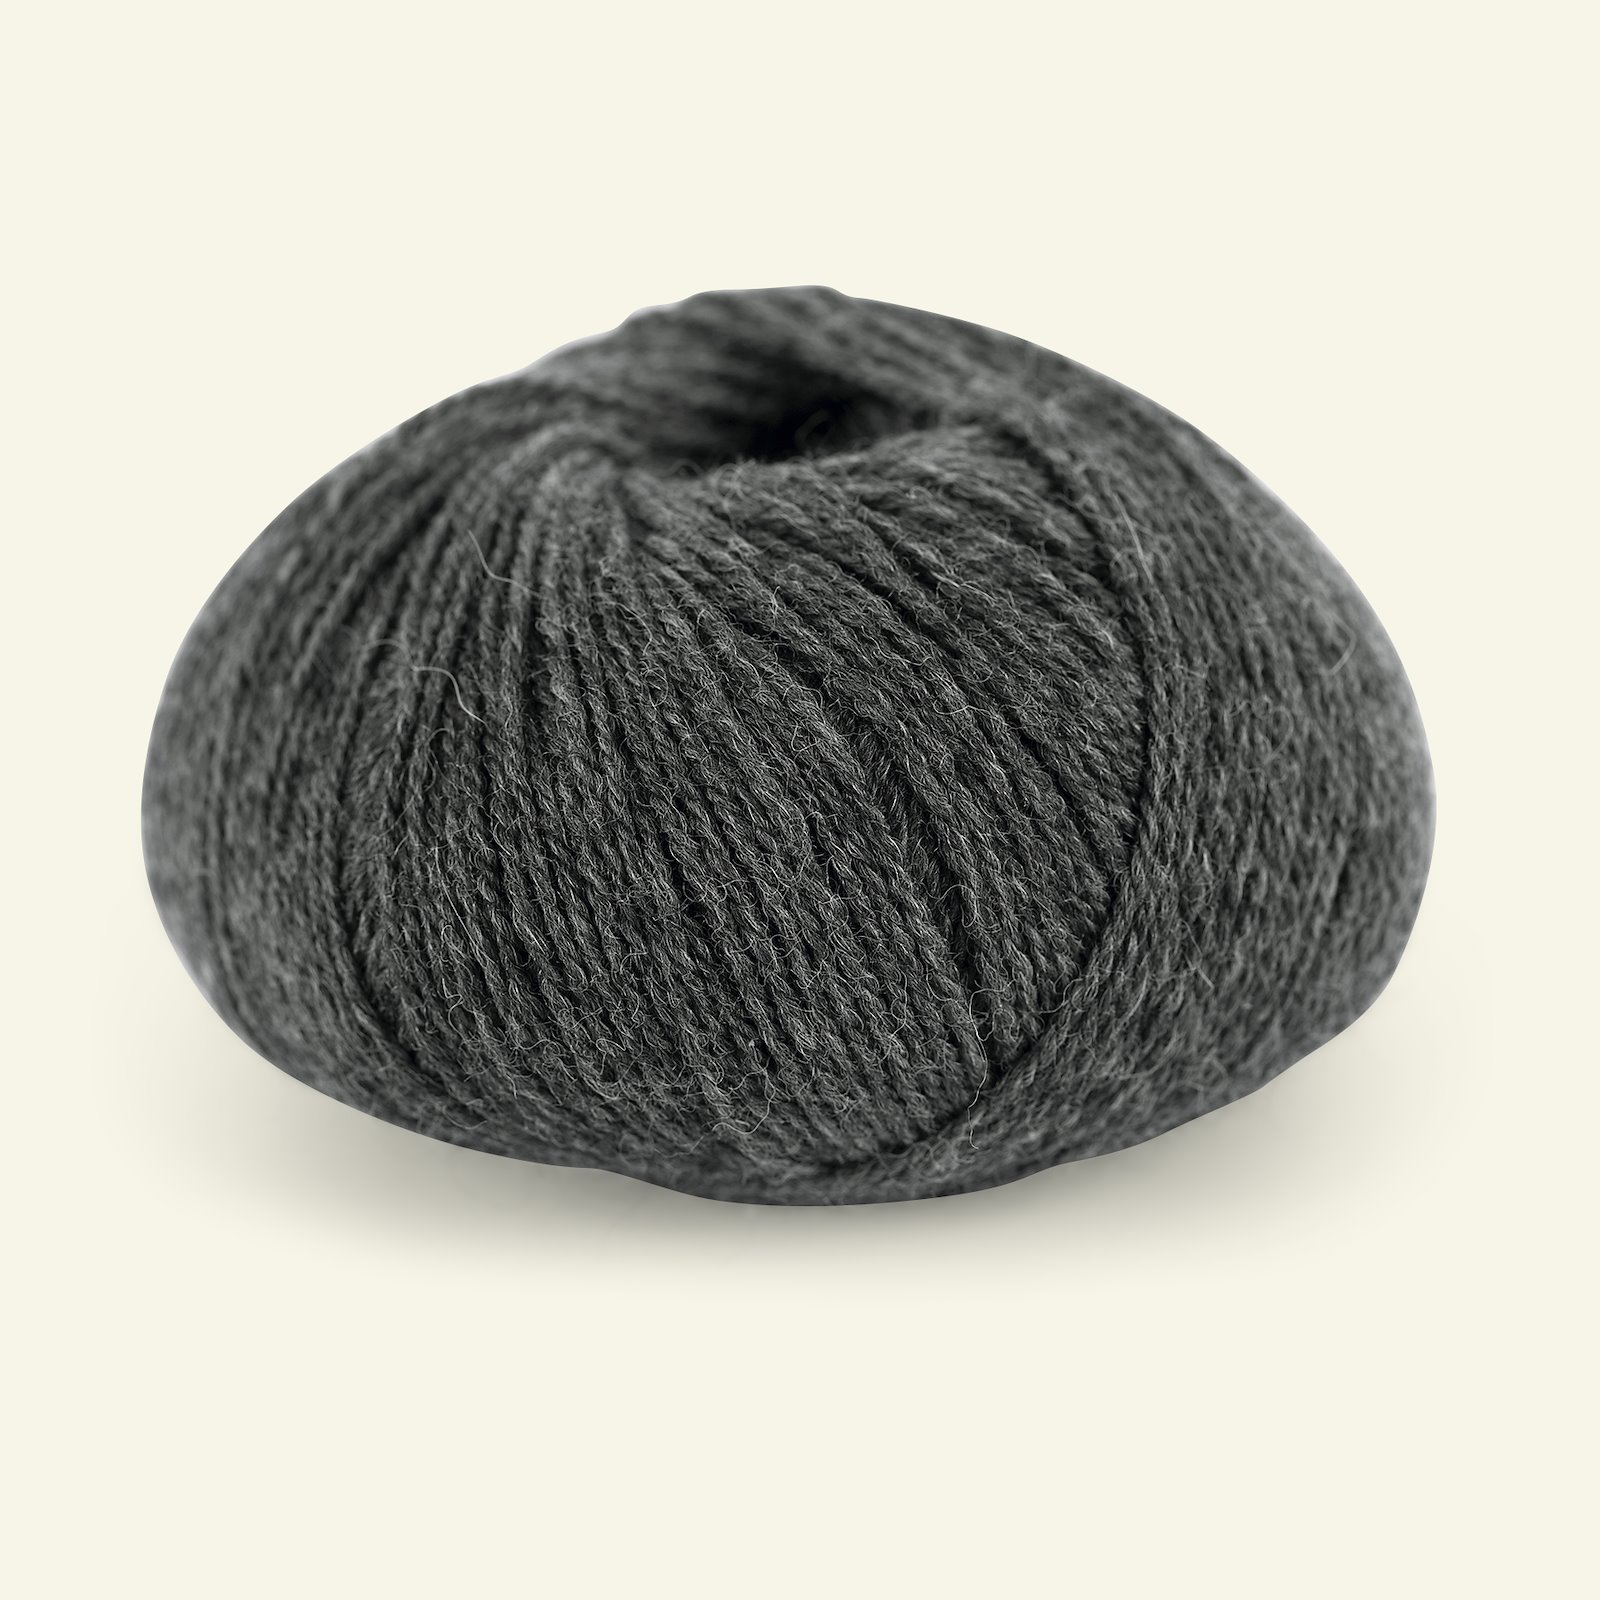 Du Store Alpakka, alpaca wool yarn, "Alpakka Wool", dark grey (503) 90000549_pack_b